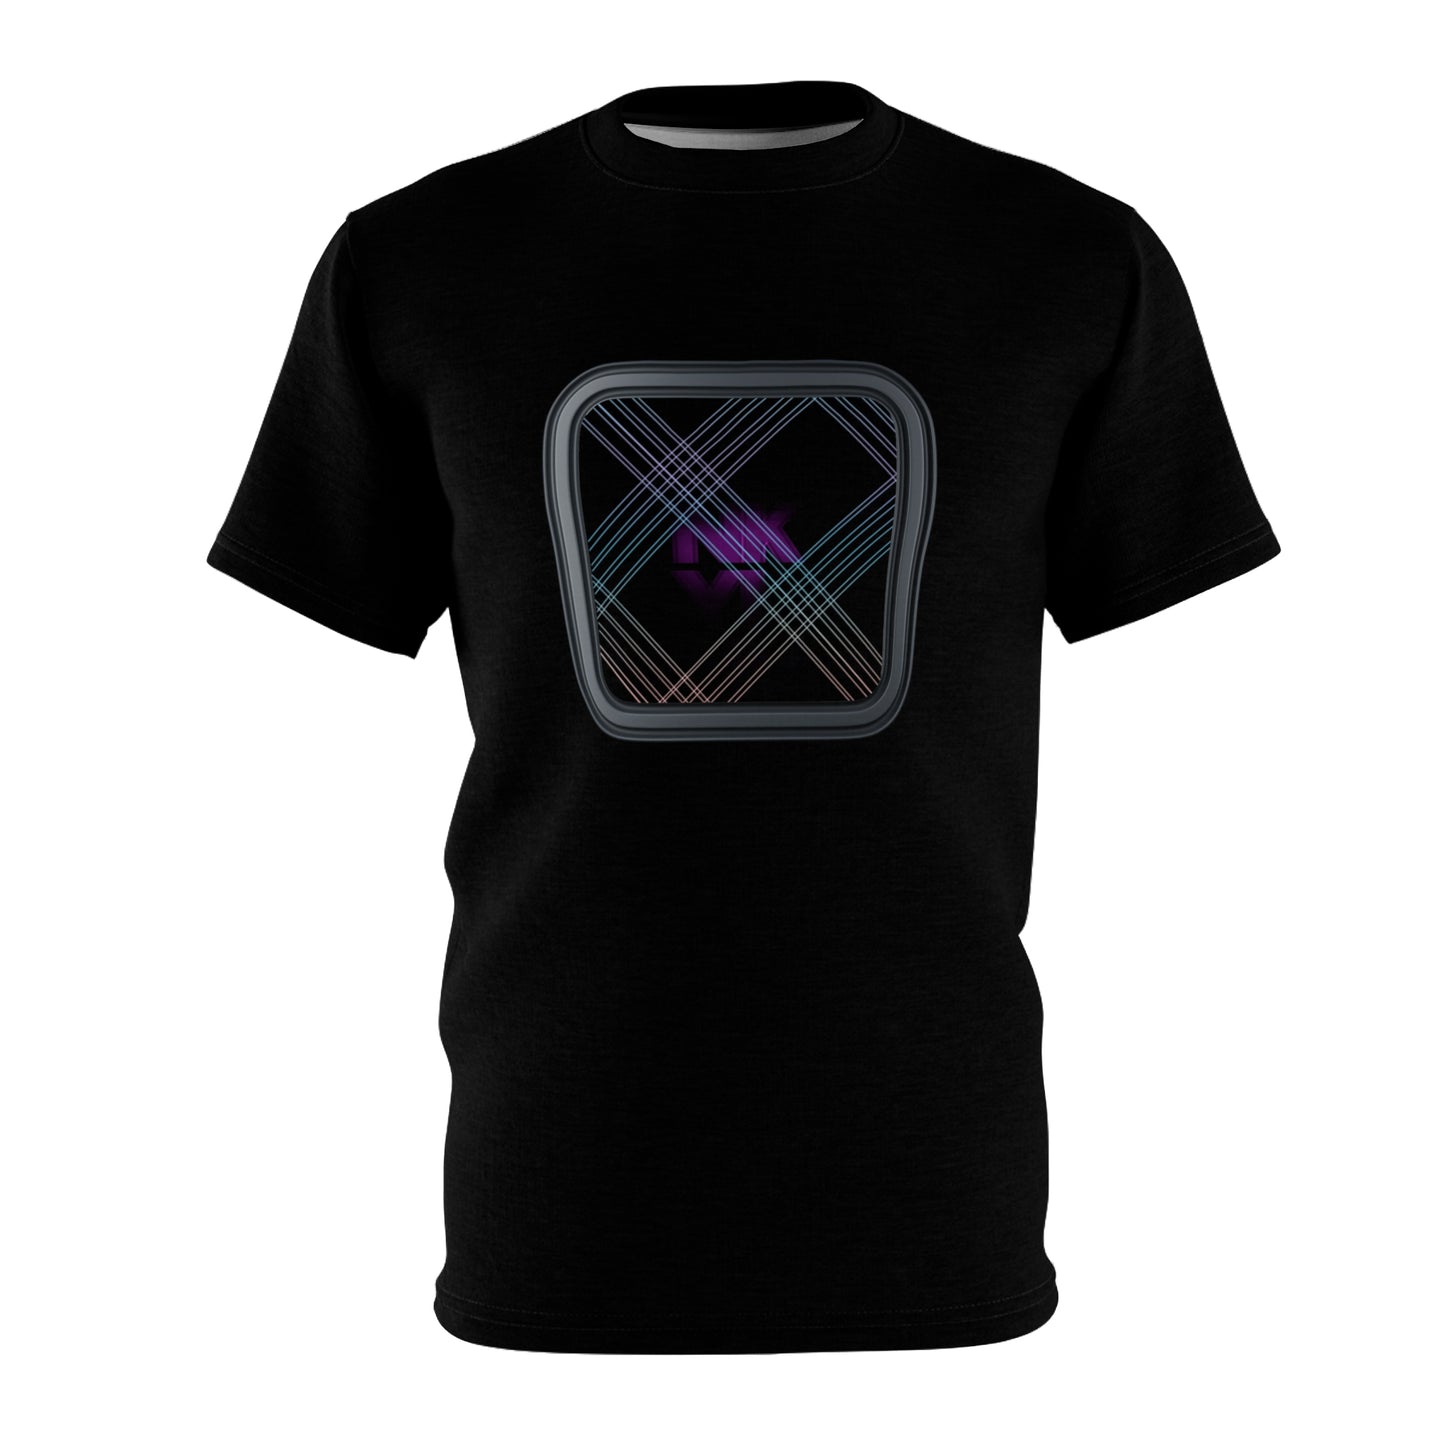 Dark matter Skilfulness, precision  T-shirt